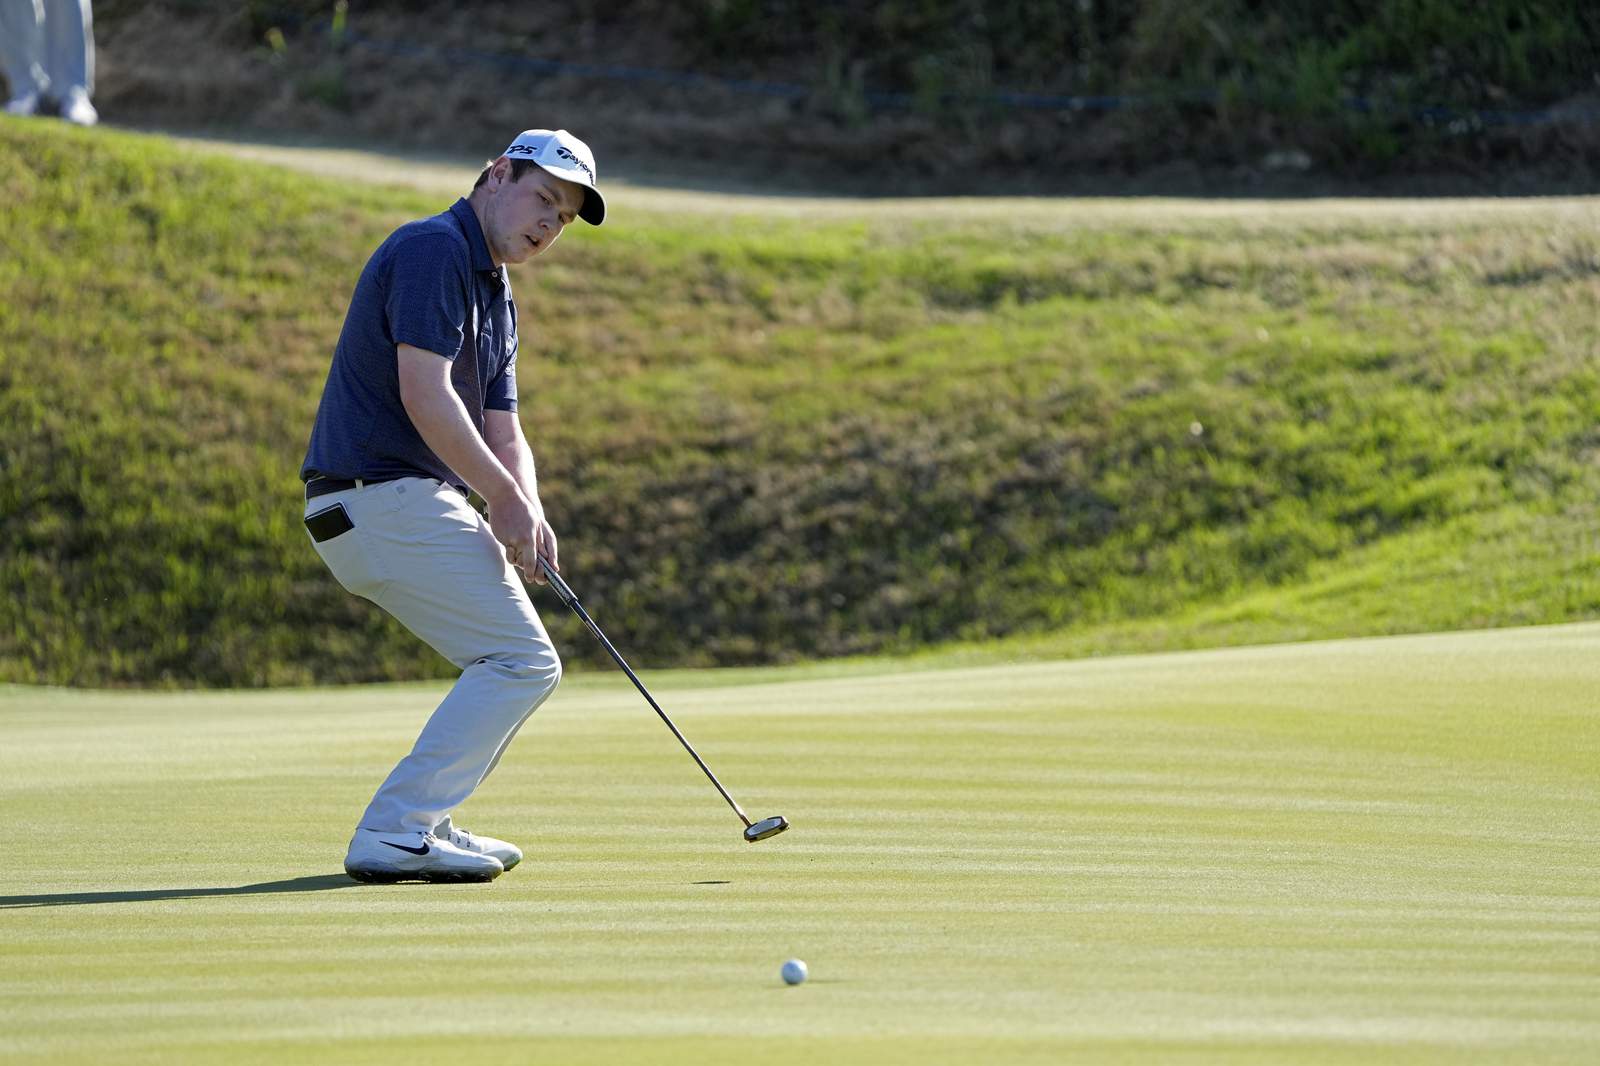 In shinty or in golf, Robert MacIntyre shows plenty of fight